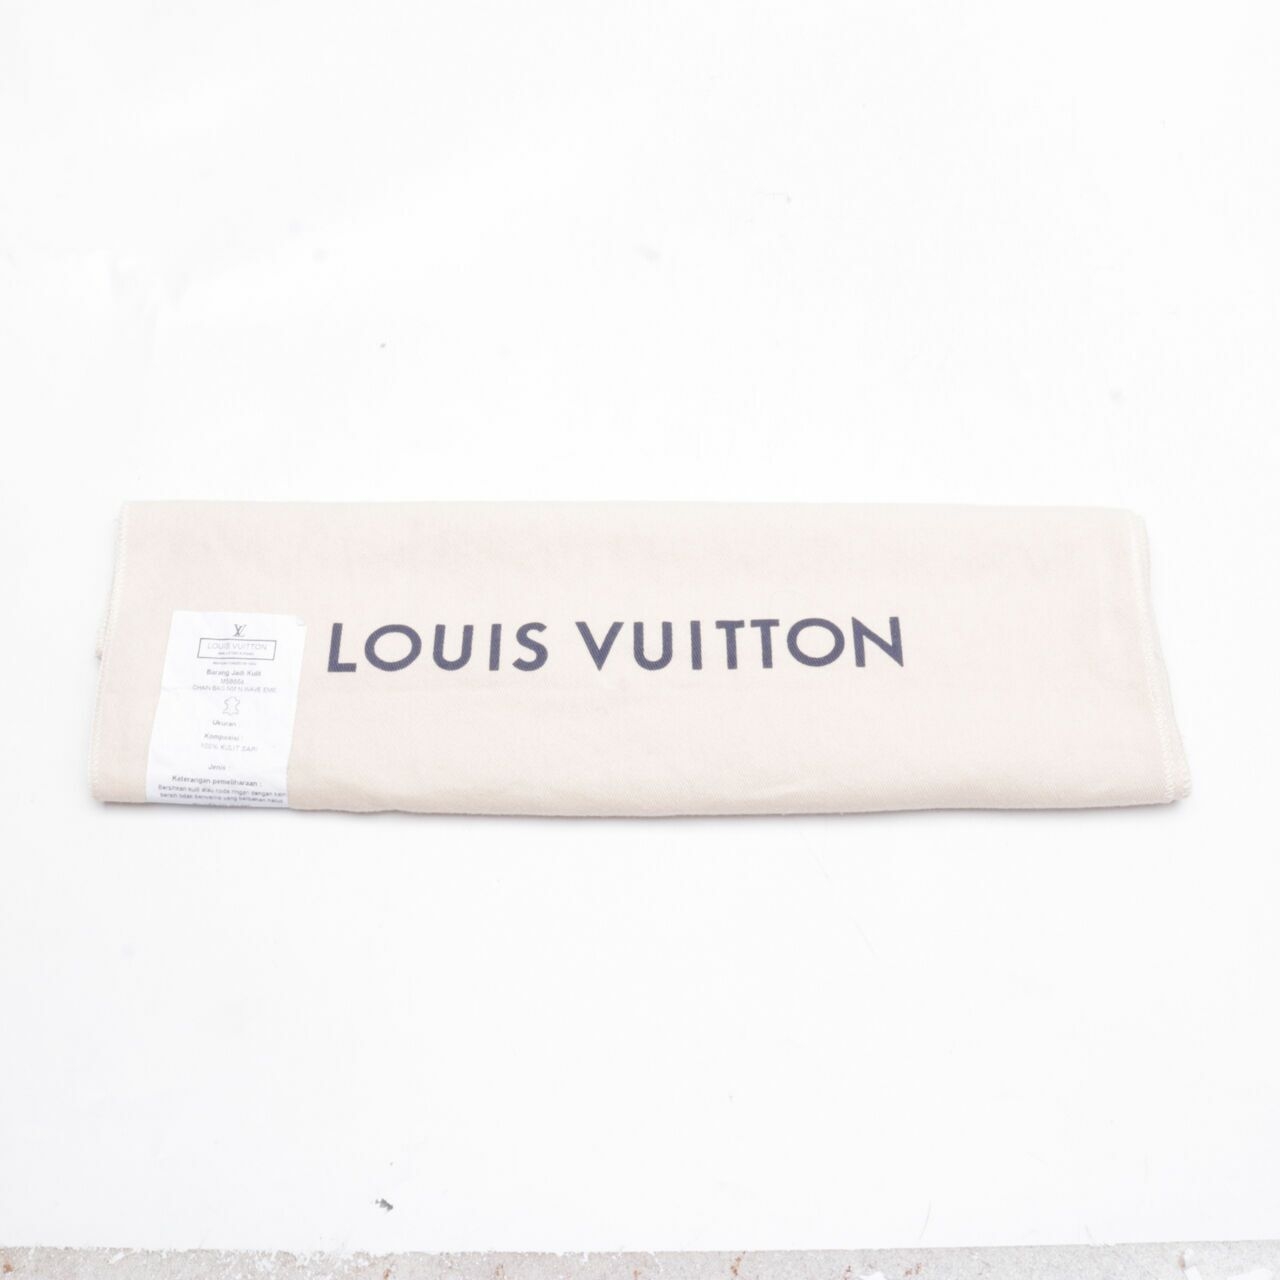 Louis New Wave Green Chain Shoulder Bag